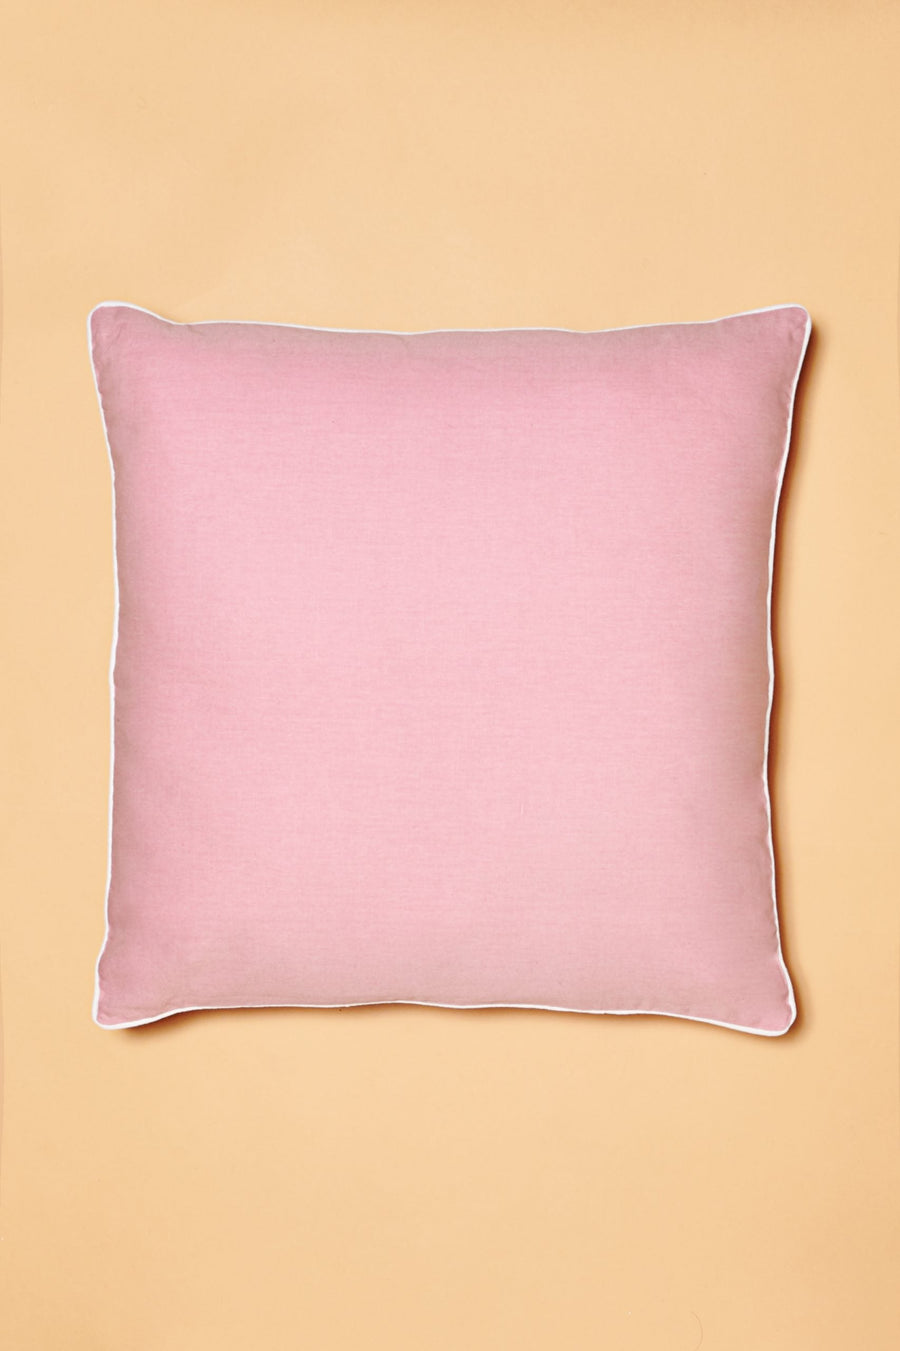 Plain Light Pink Cushion (60 x 60 cm)